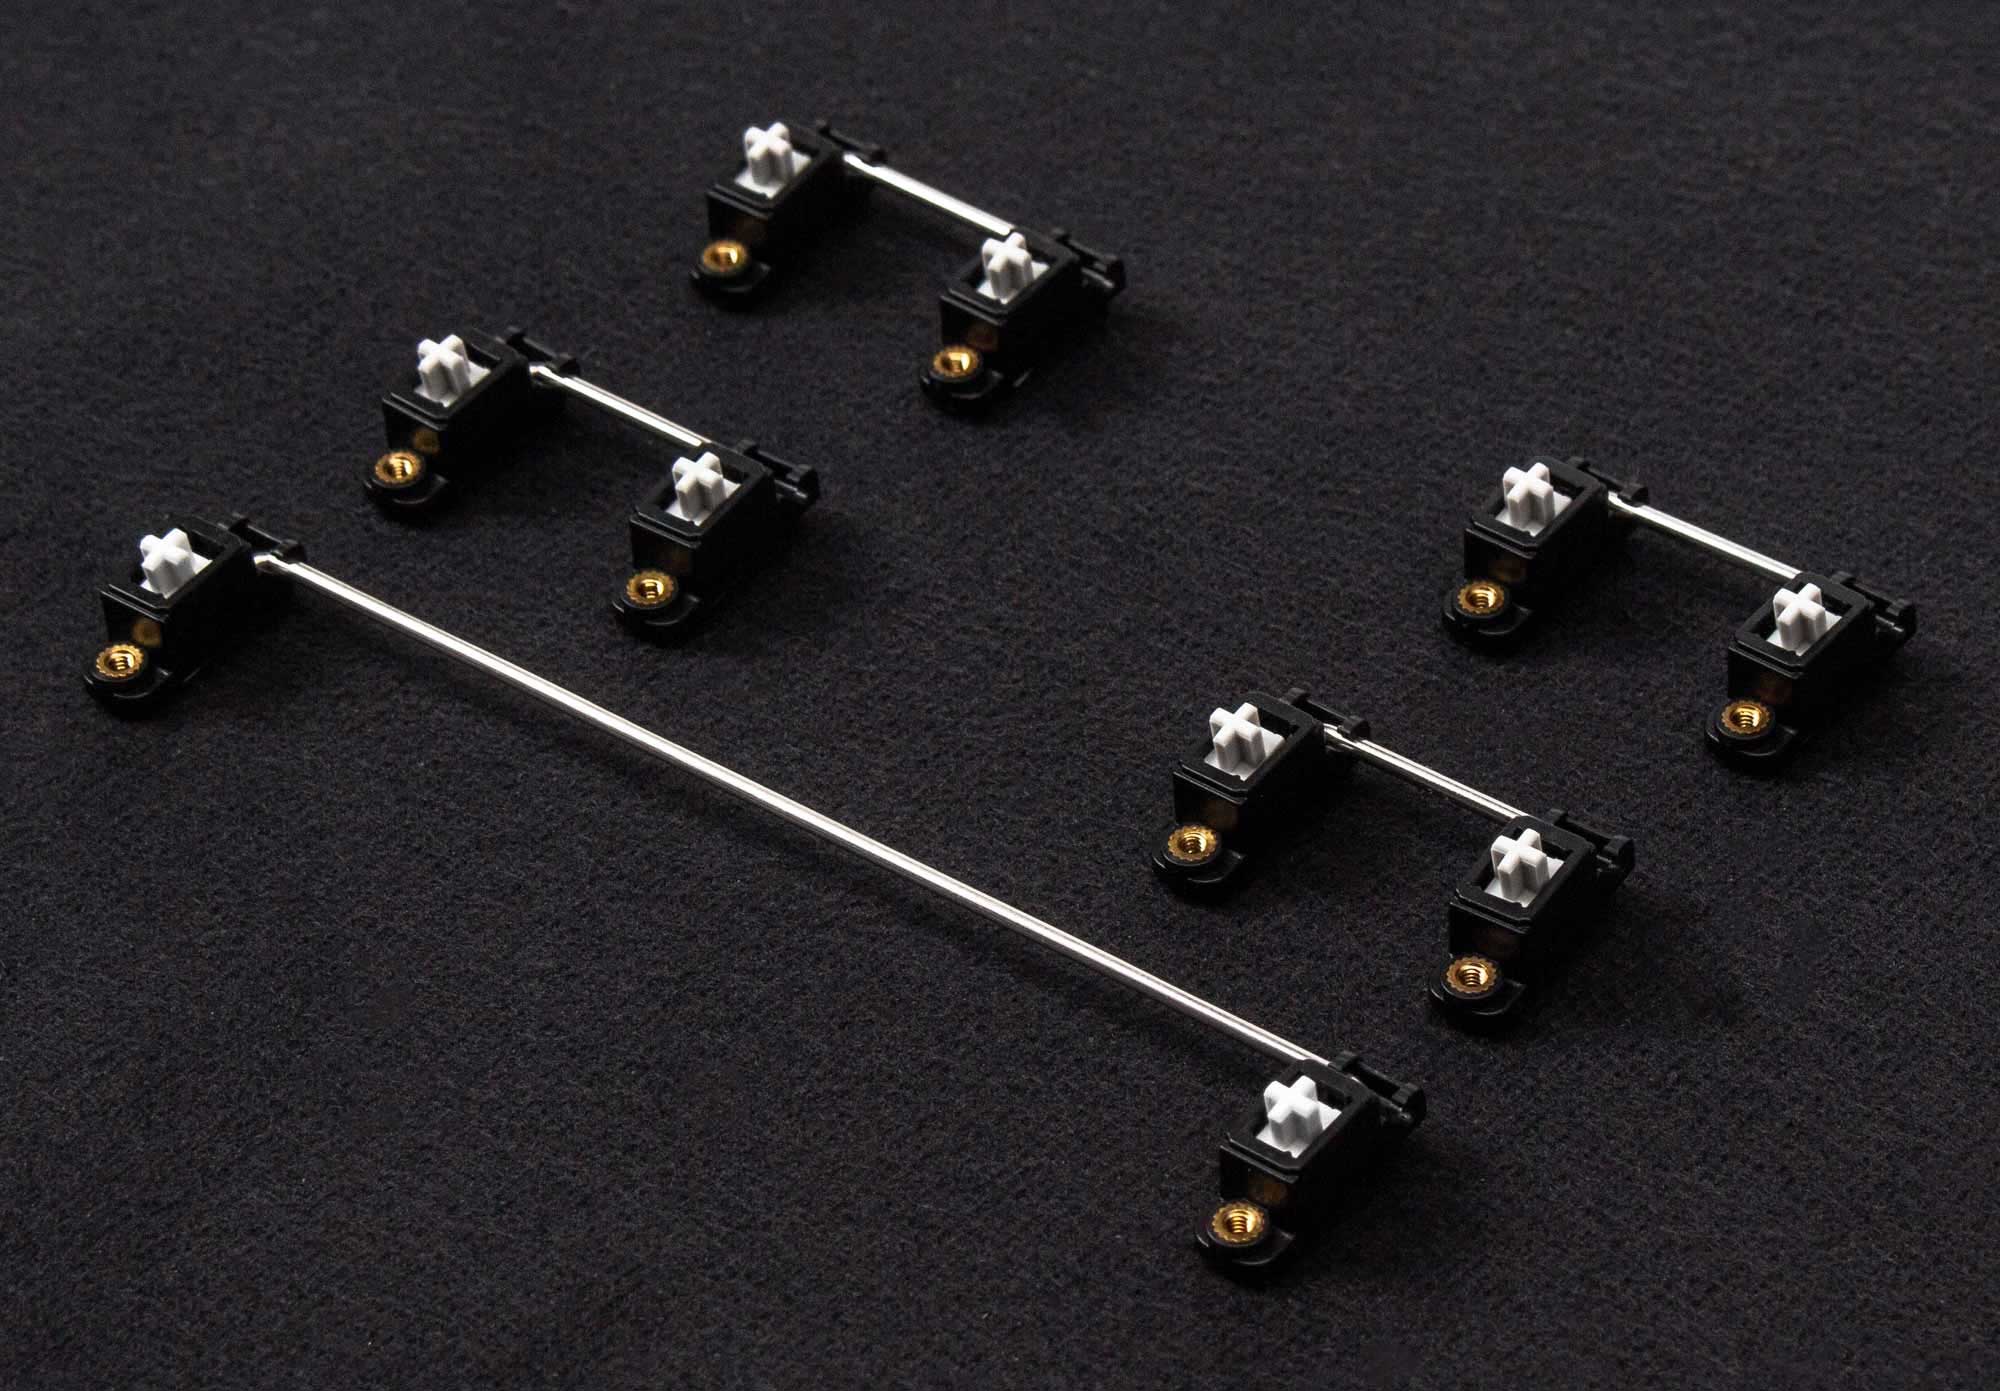 Stabilizers of Keychron Q1 HE Wireless QMK Custom Magnetic Switch Keyboard